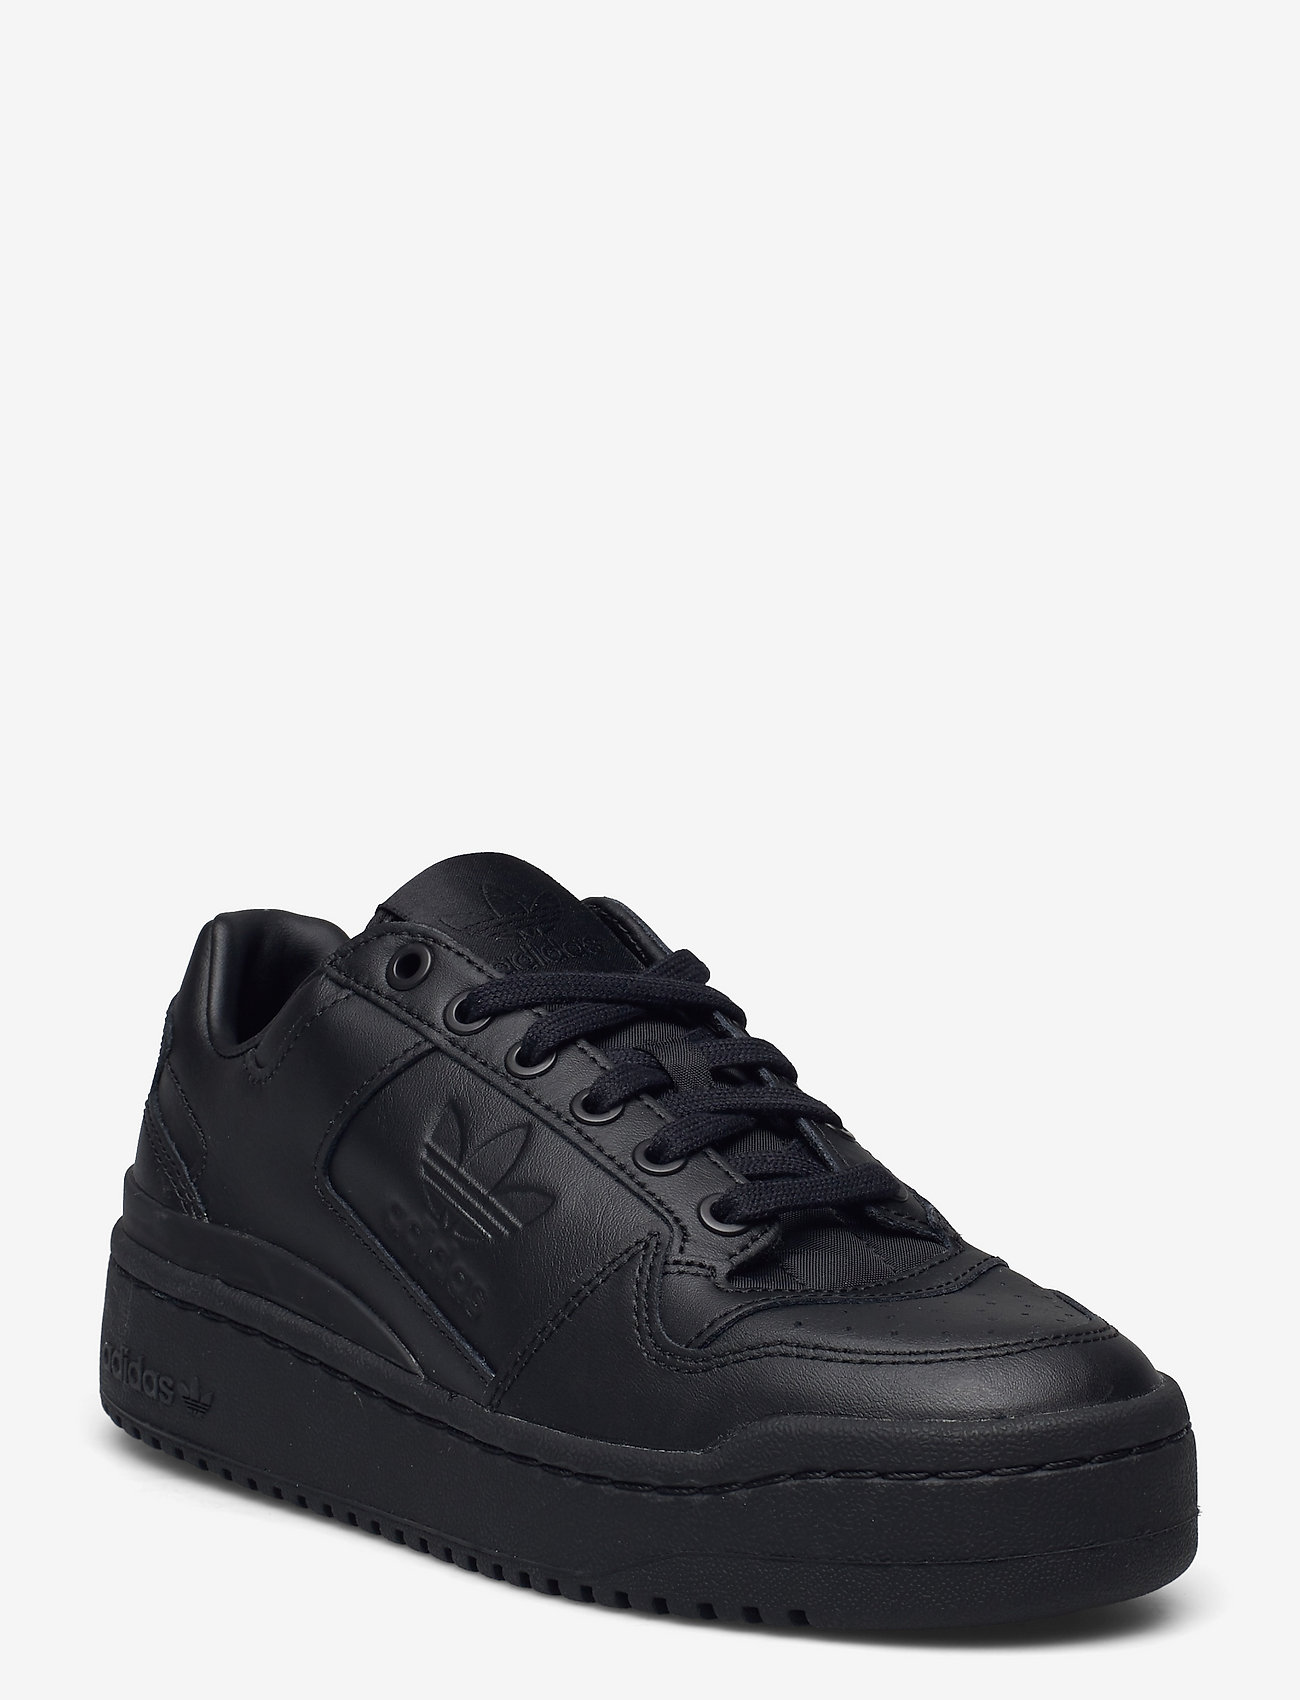 adidas Originals - FORUM BOLD SHOES - low top sneakers - cblack/cblack/ftwwht - 0